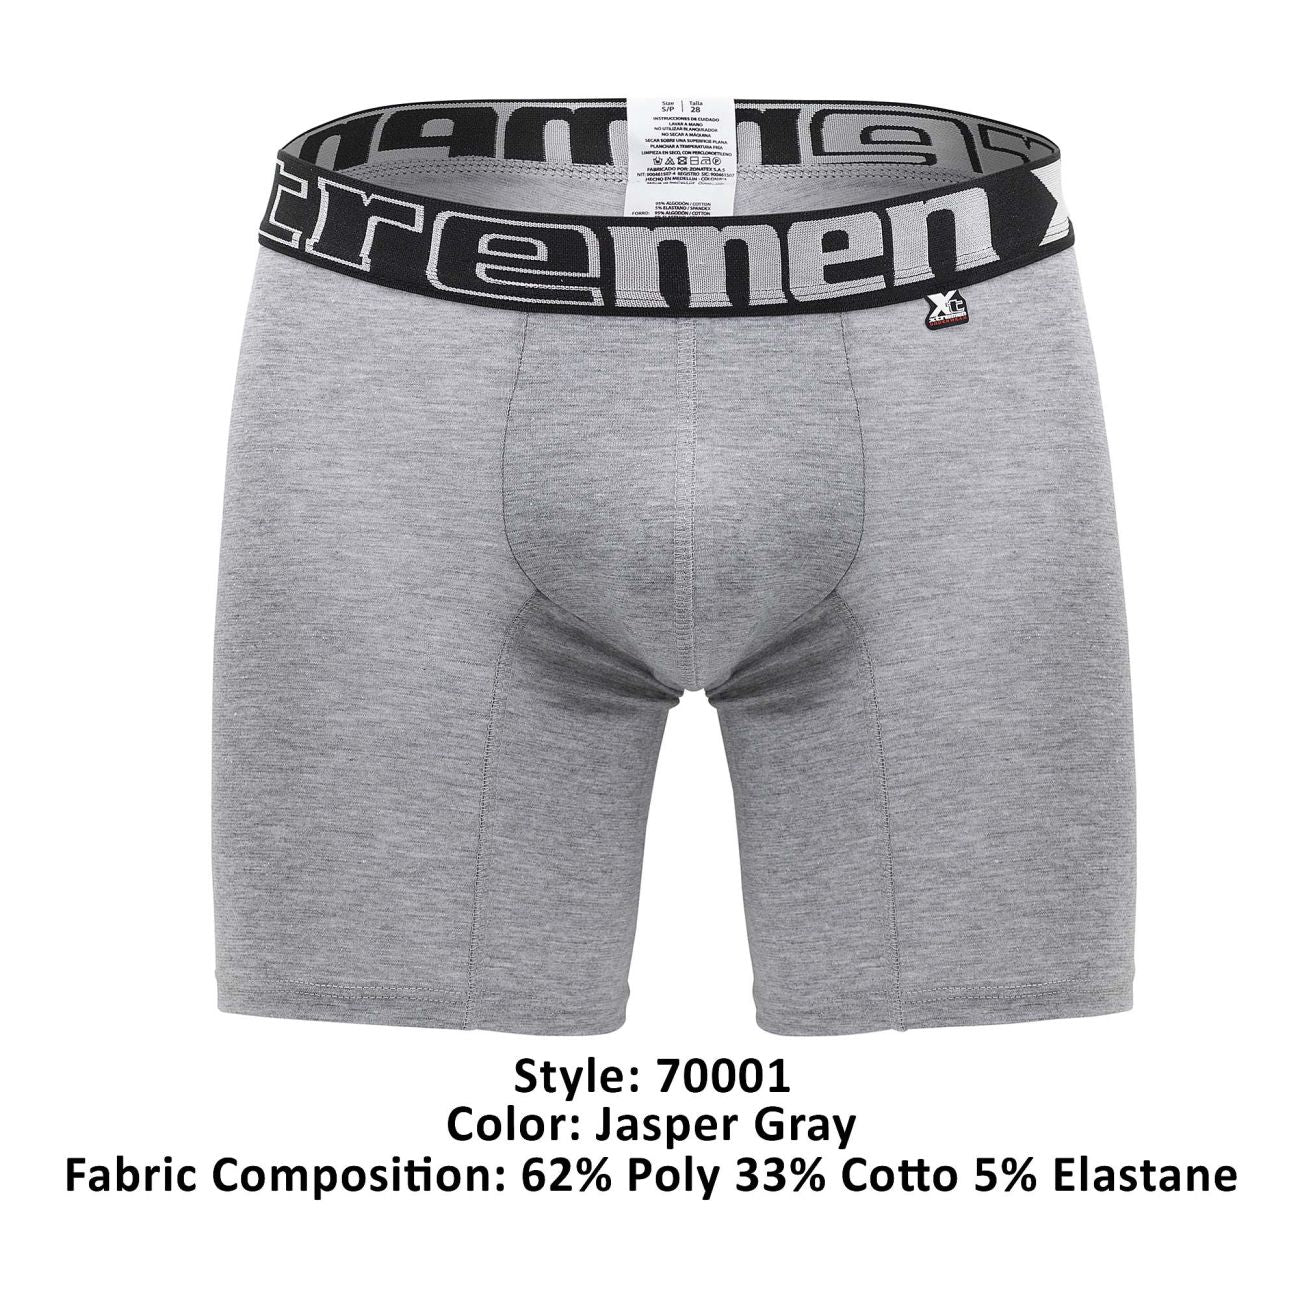 Xtremen 70001 Essential Boxer Jasper Gray Plus Sizes